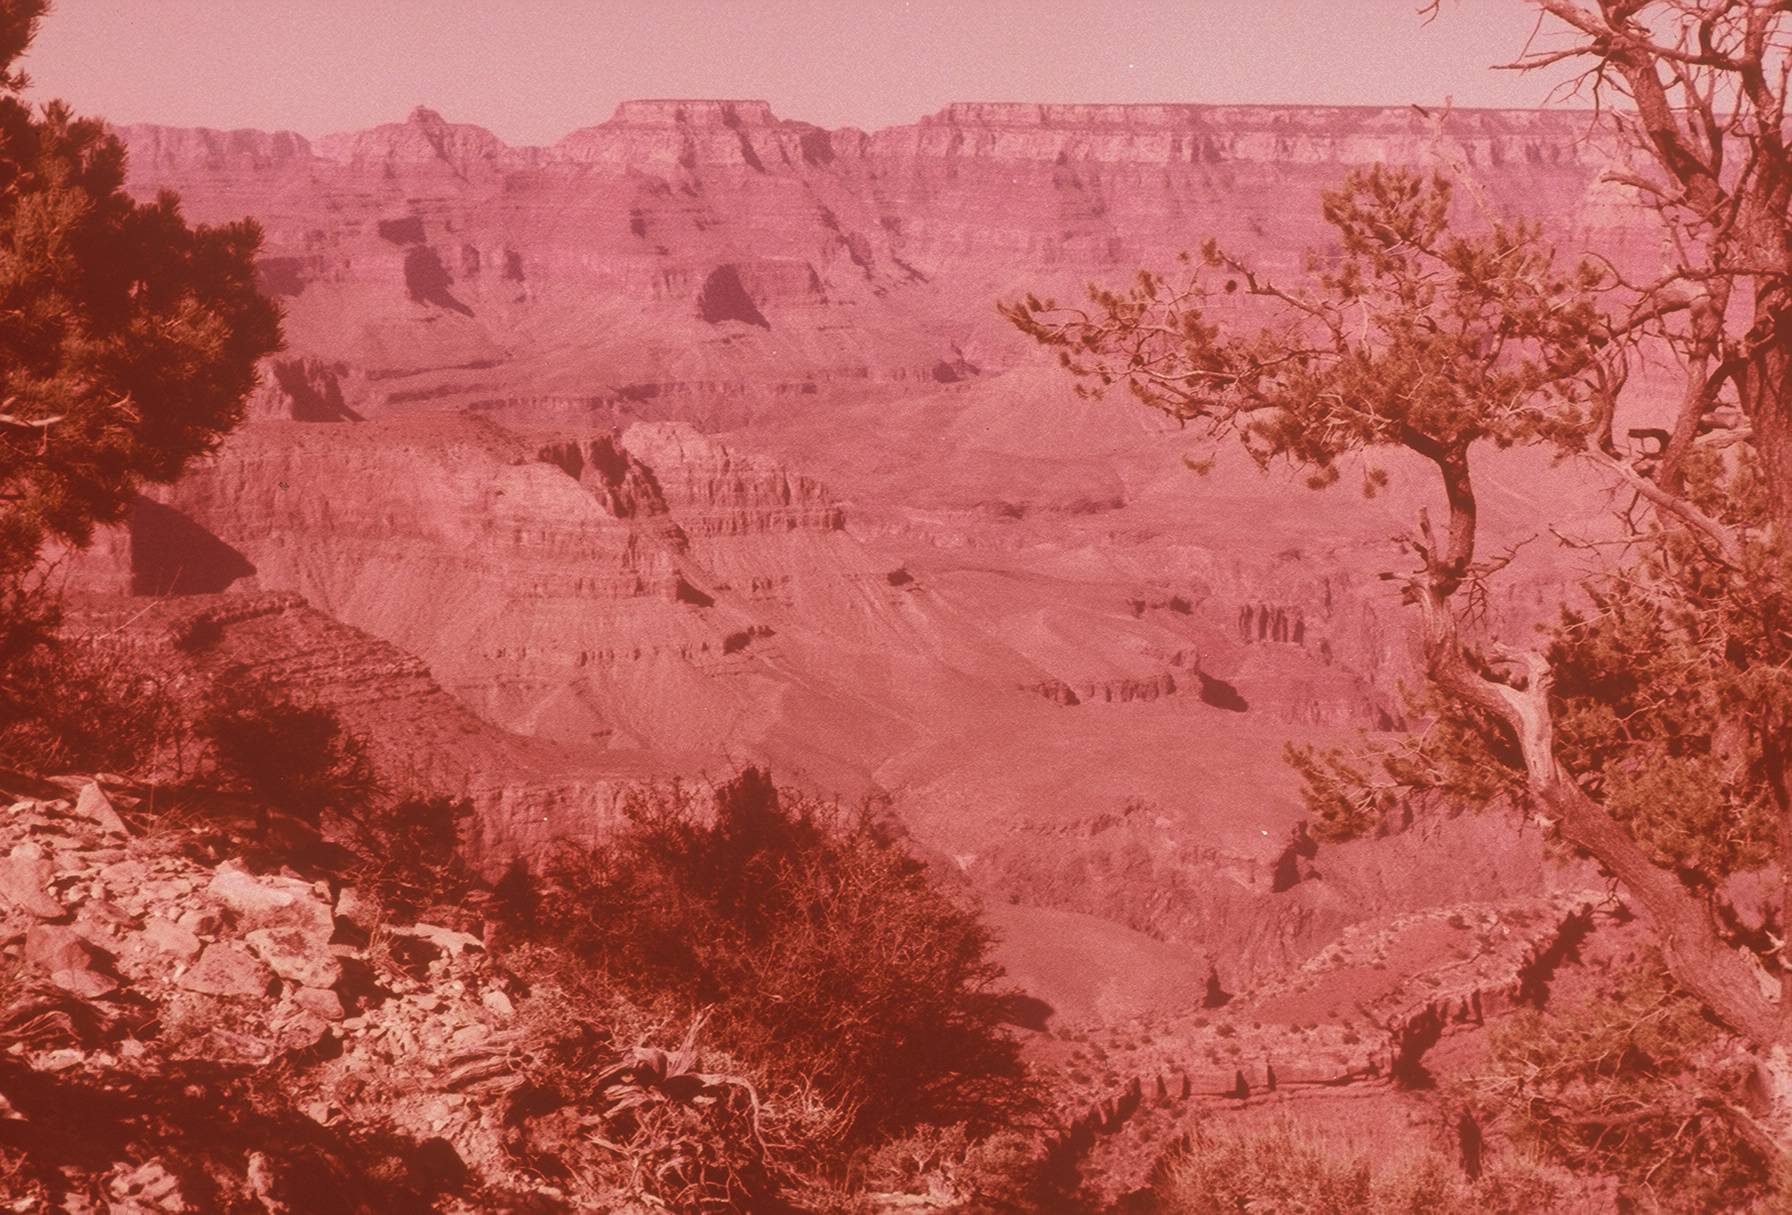 Walgreen's final scan of Grand Canyon slide